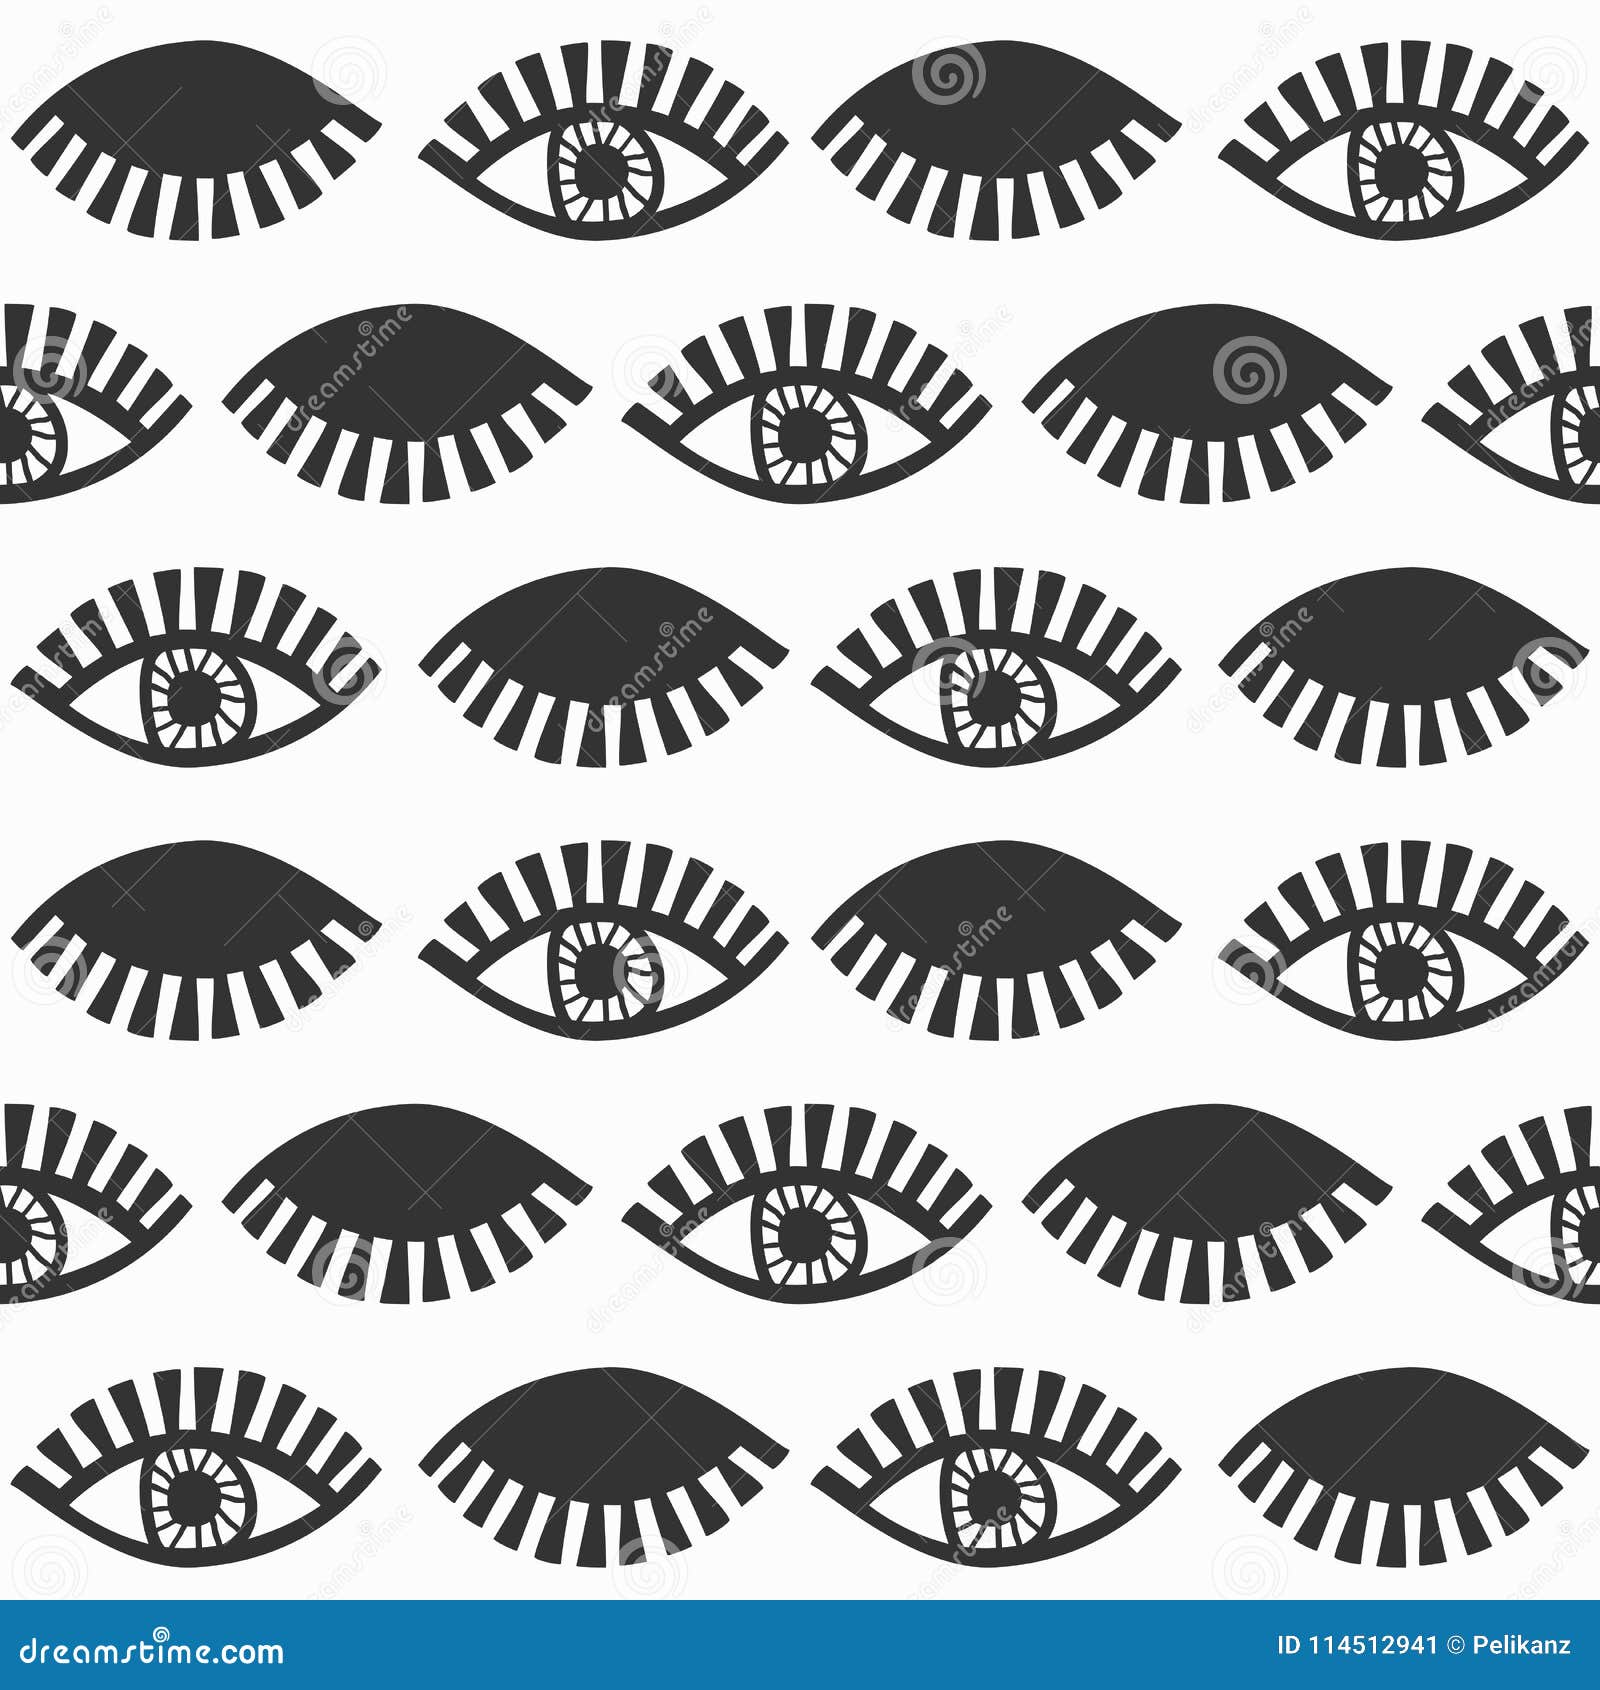 abstract black blinking feminine eyes with lashes pattern on white